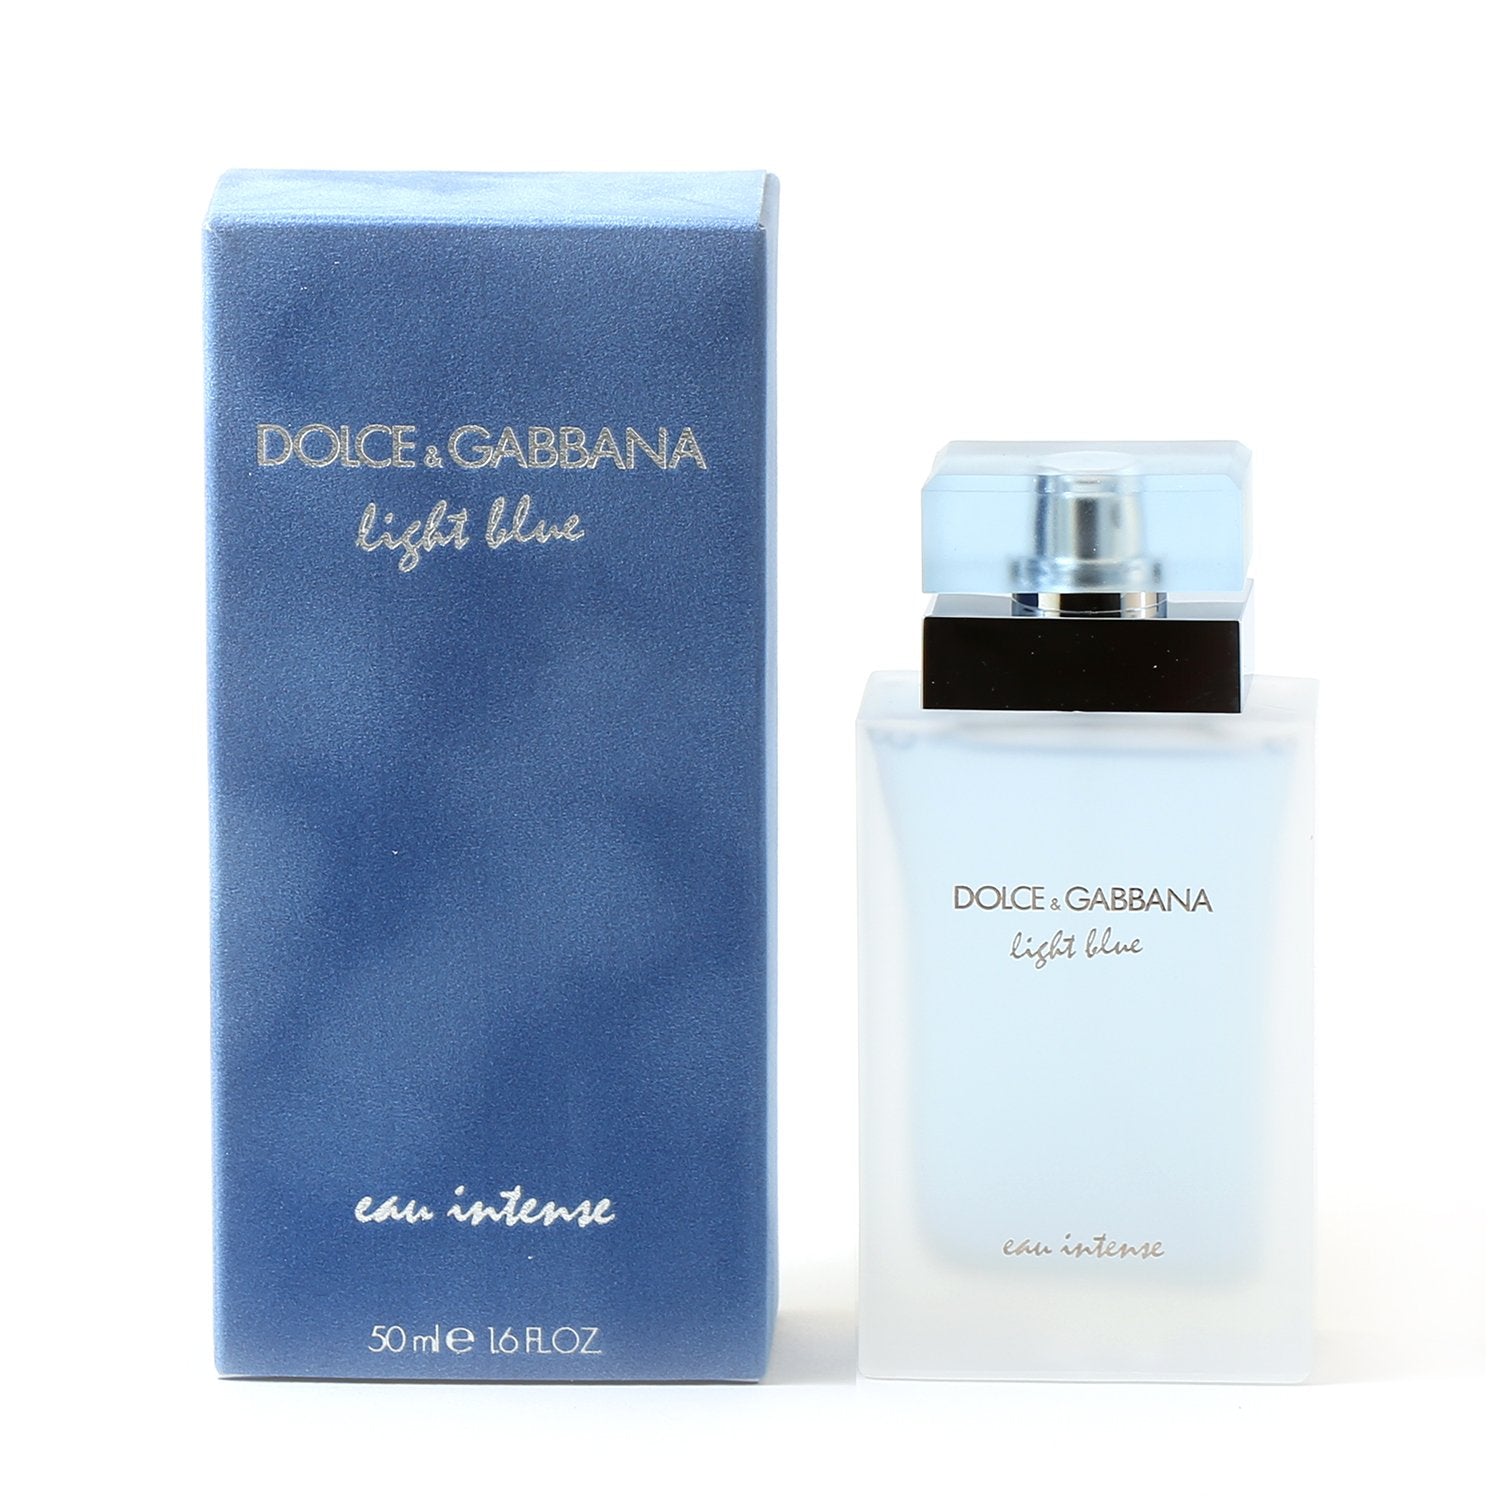 Perfume - DOLCE & GABBANA LIGHT BLUE EAU INTENSE FOR WOMEN - EAU DE PARFUM SPRAY 1.7 OZ